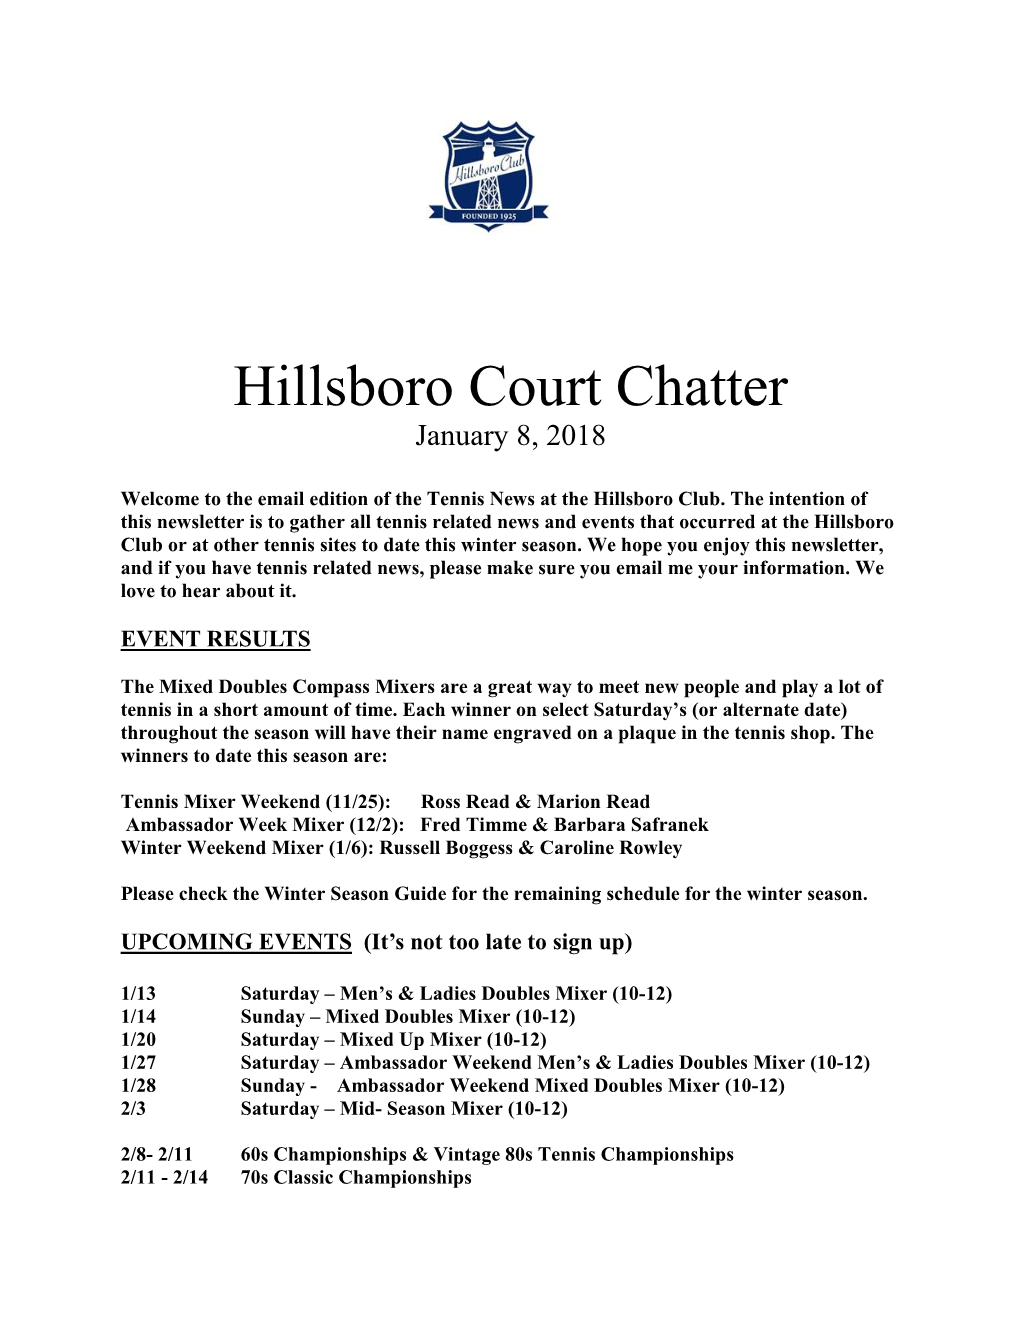 Hillsboro Court Chatter January 8, 2018